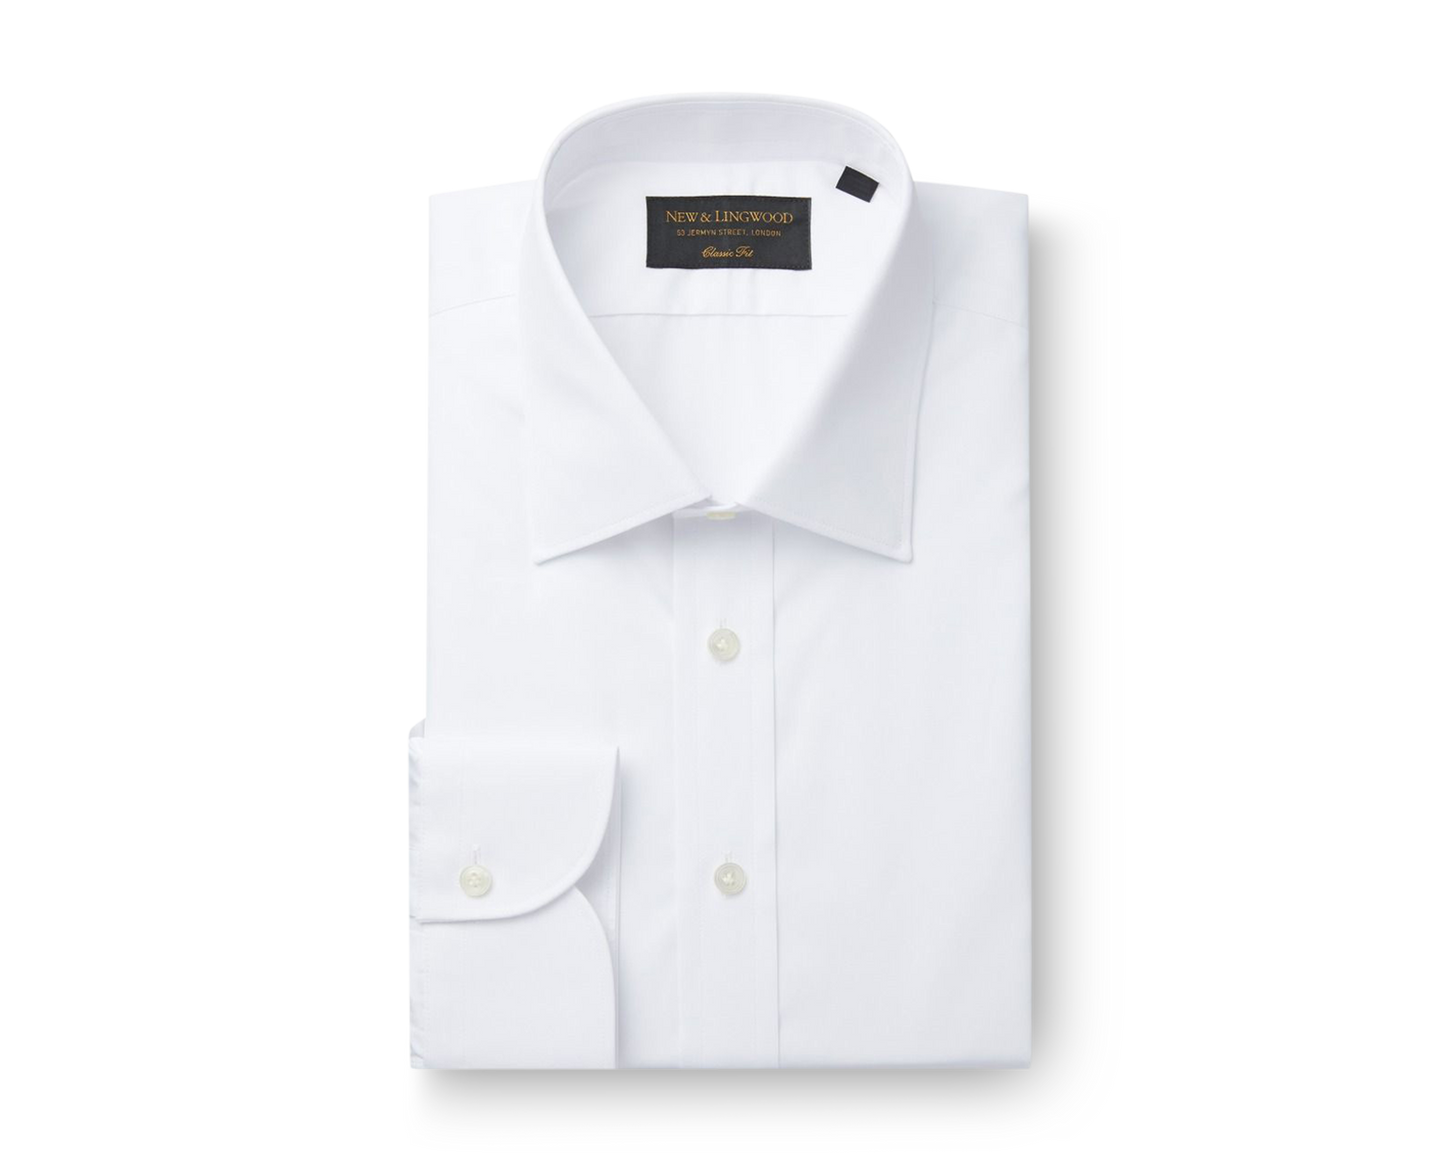 White Poplin St James's Collar Classic Fit Single Cuff Shirt